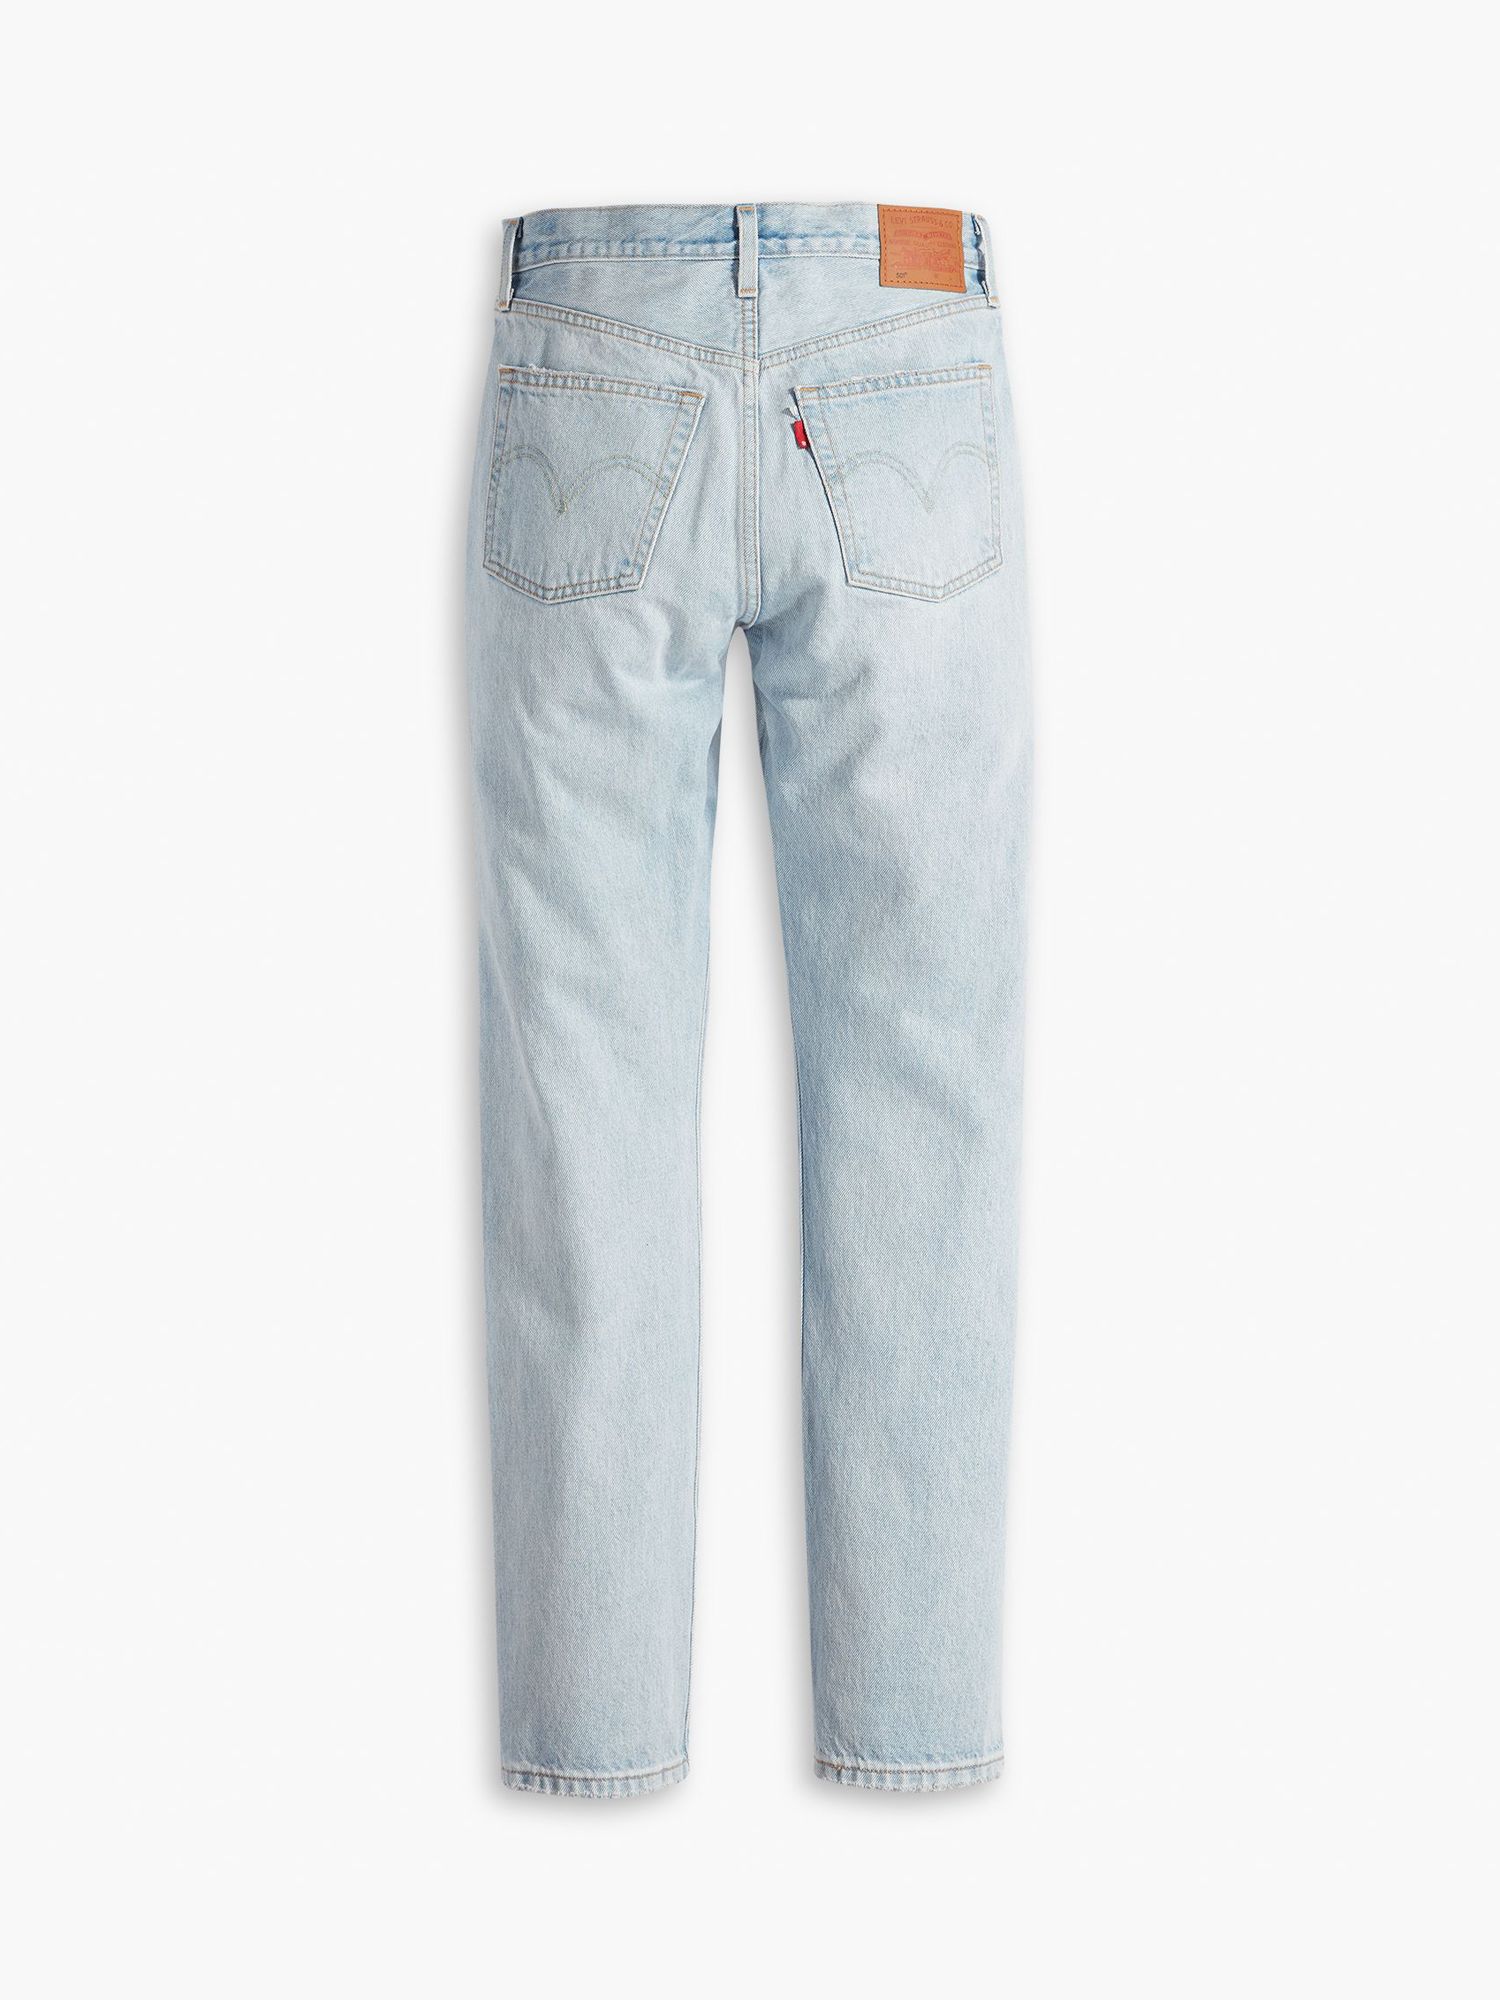 Levi's 501 Straight Cut Embellished Jeans, Bling Blau at John Lewis ...